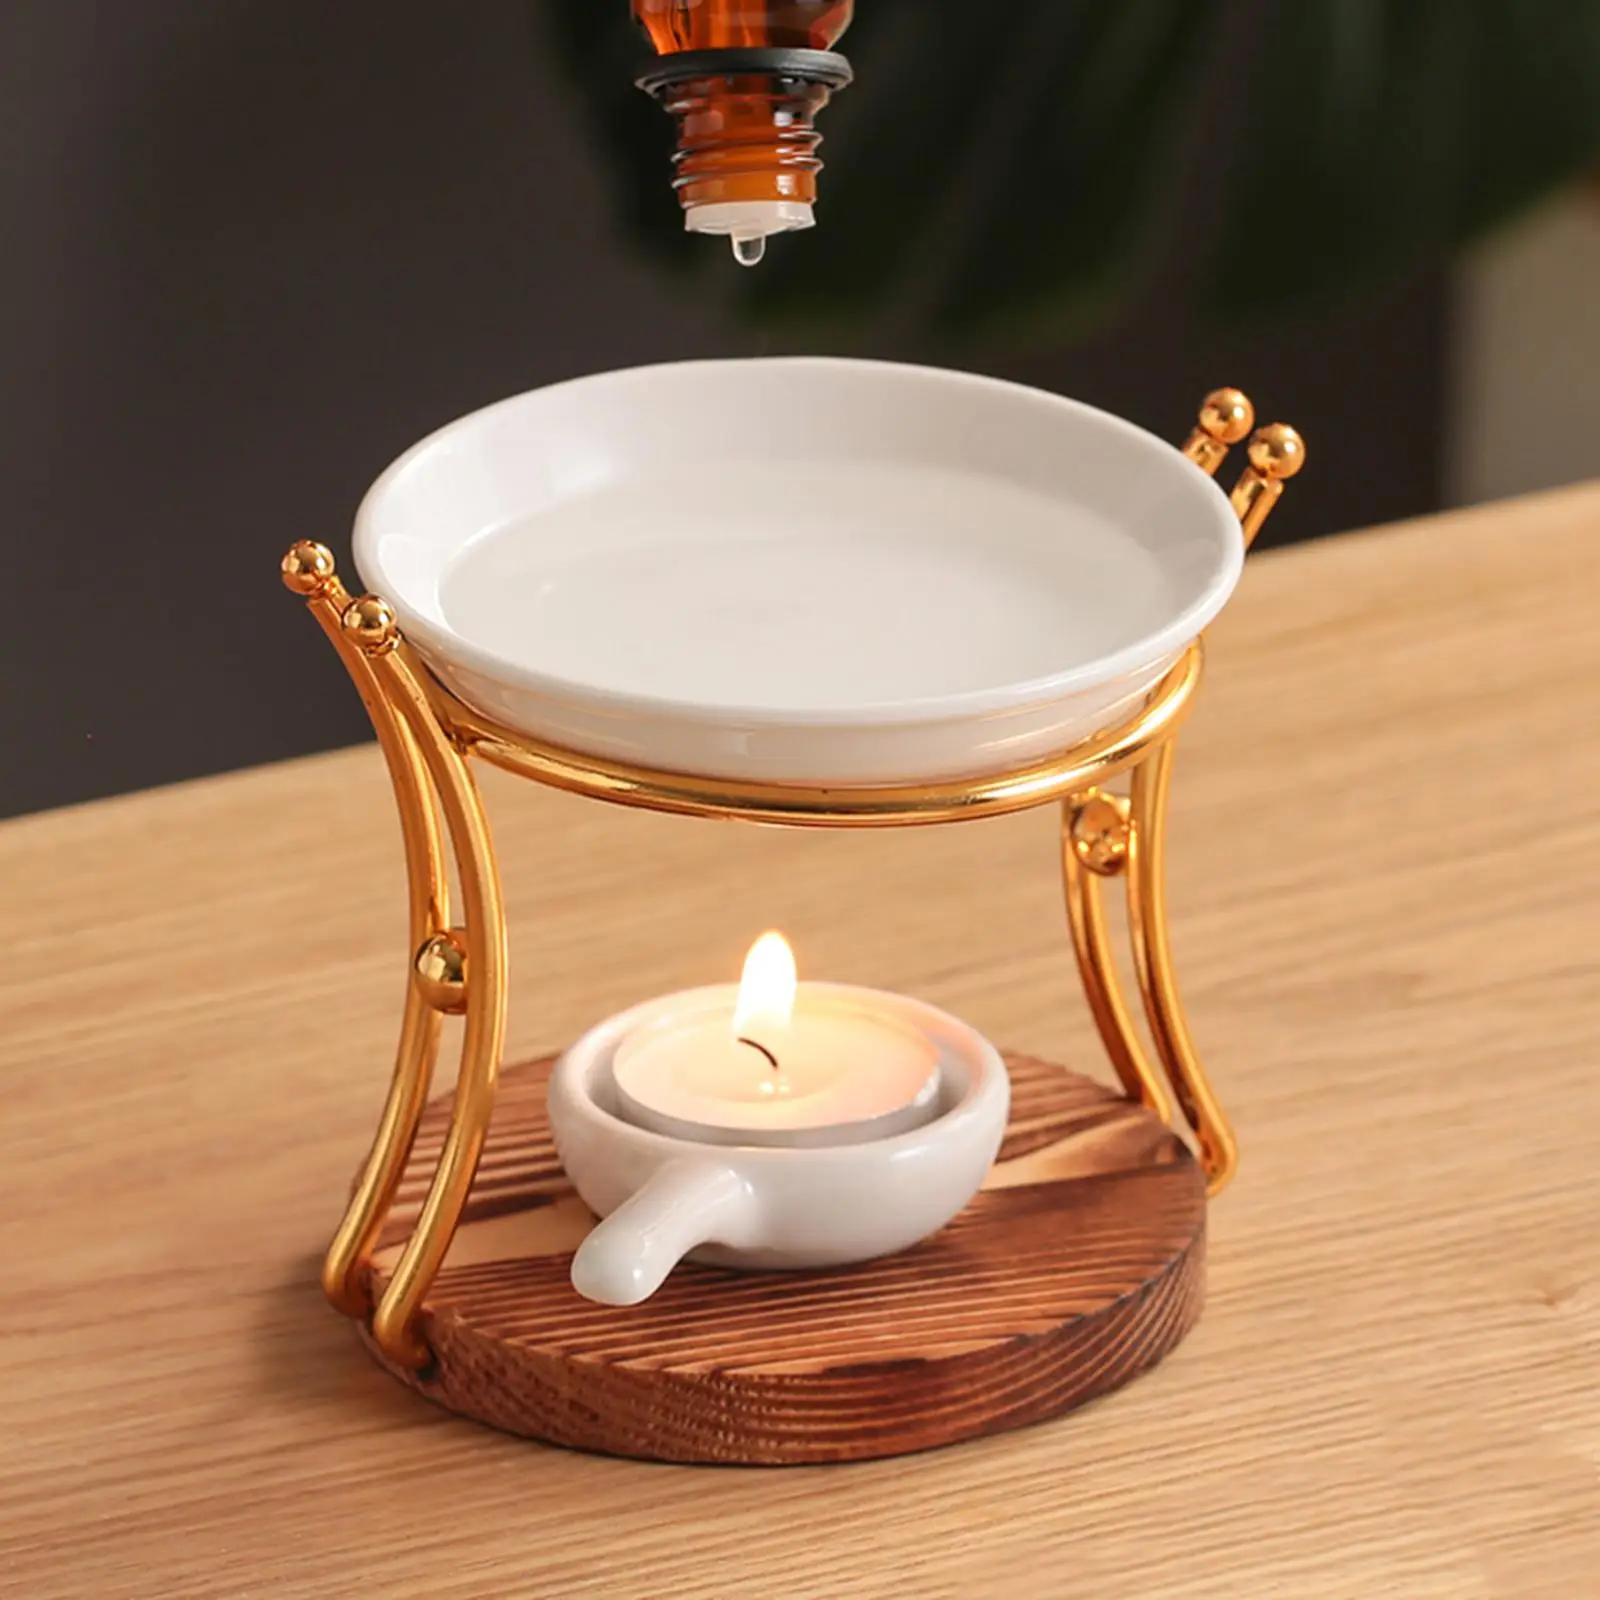 Oil Burner Candle Holder Wax Melt Burner Ceramic with Candle Spoon Oil Warmer for Spa Room Yoga Decoration Ornament